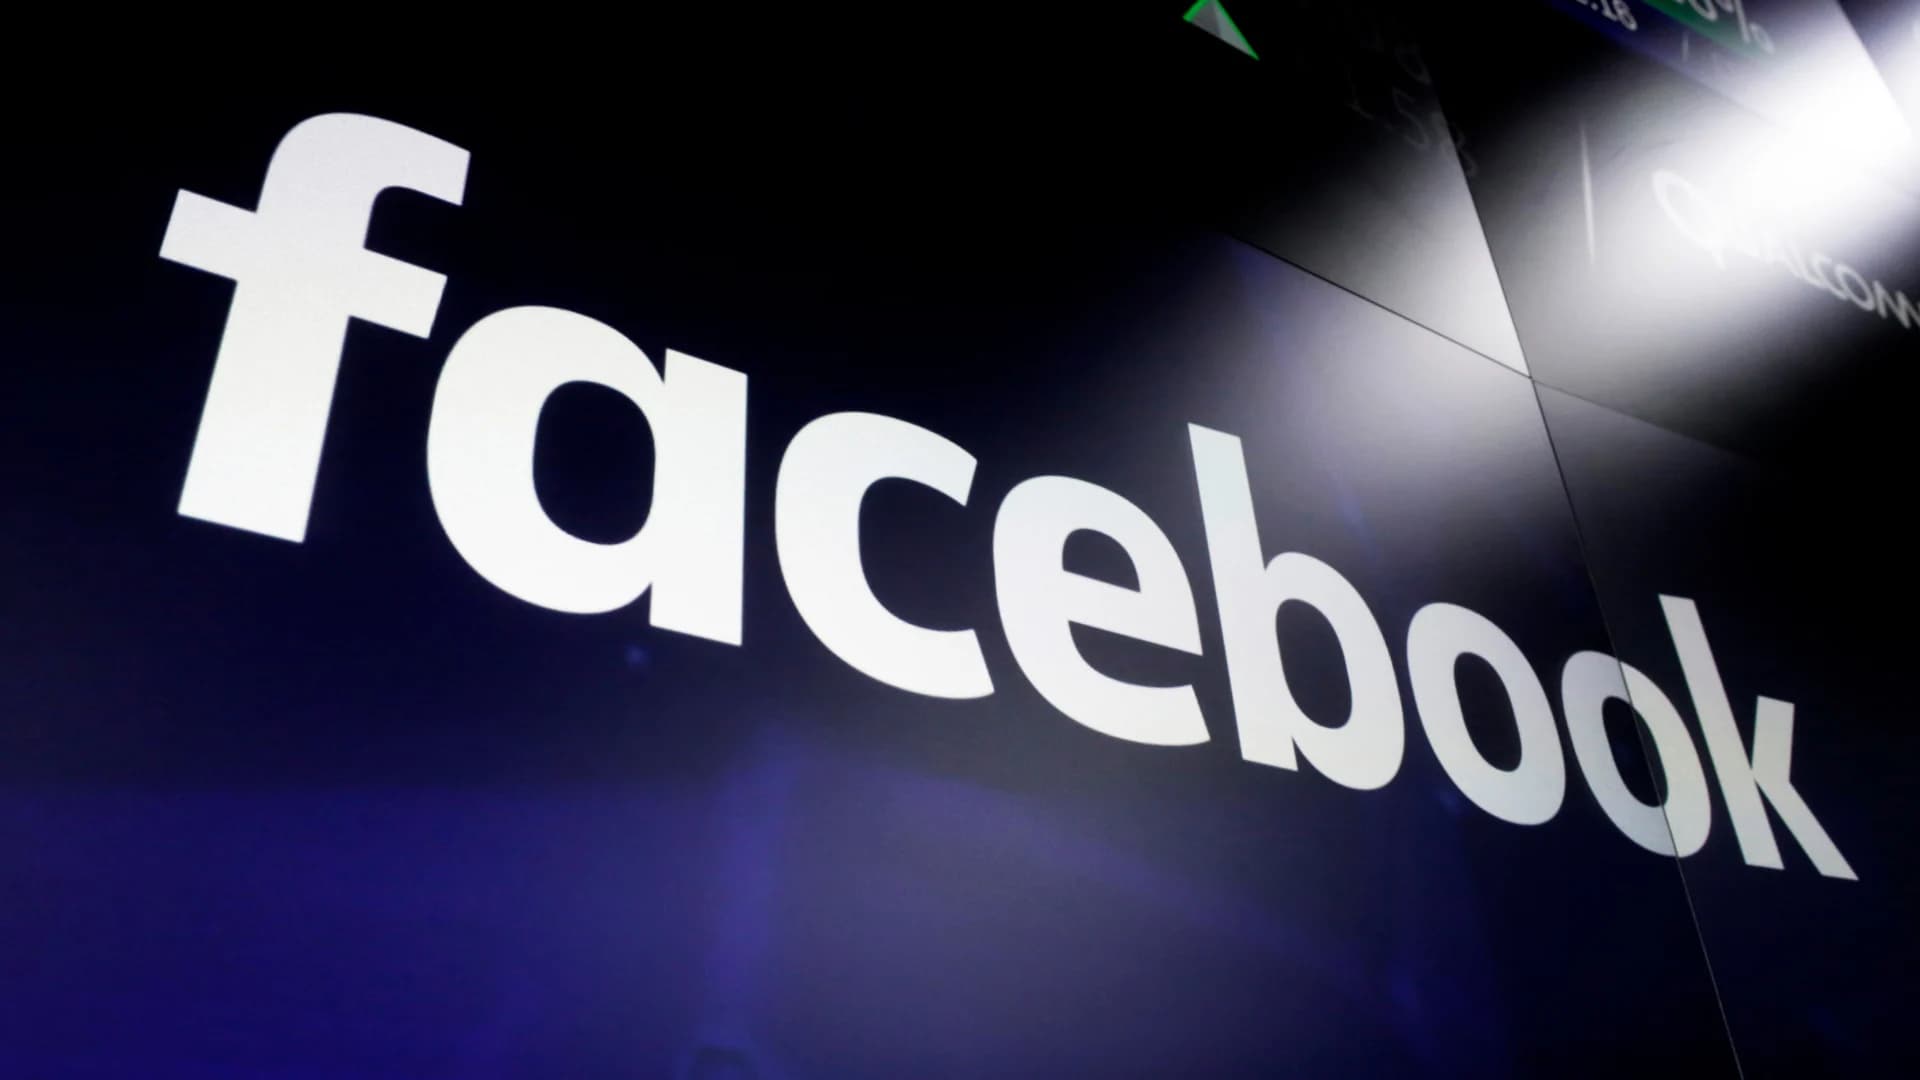 US government, states bring antitrust action against Facebook